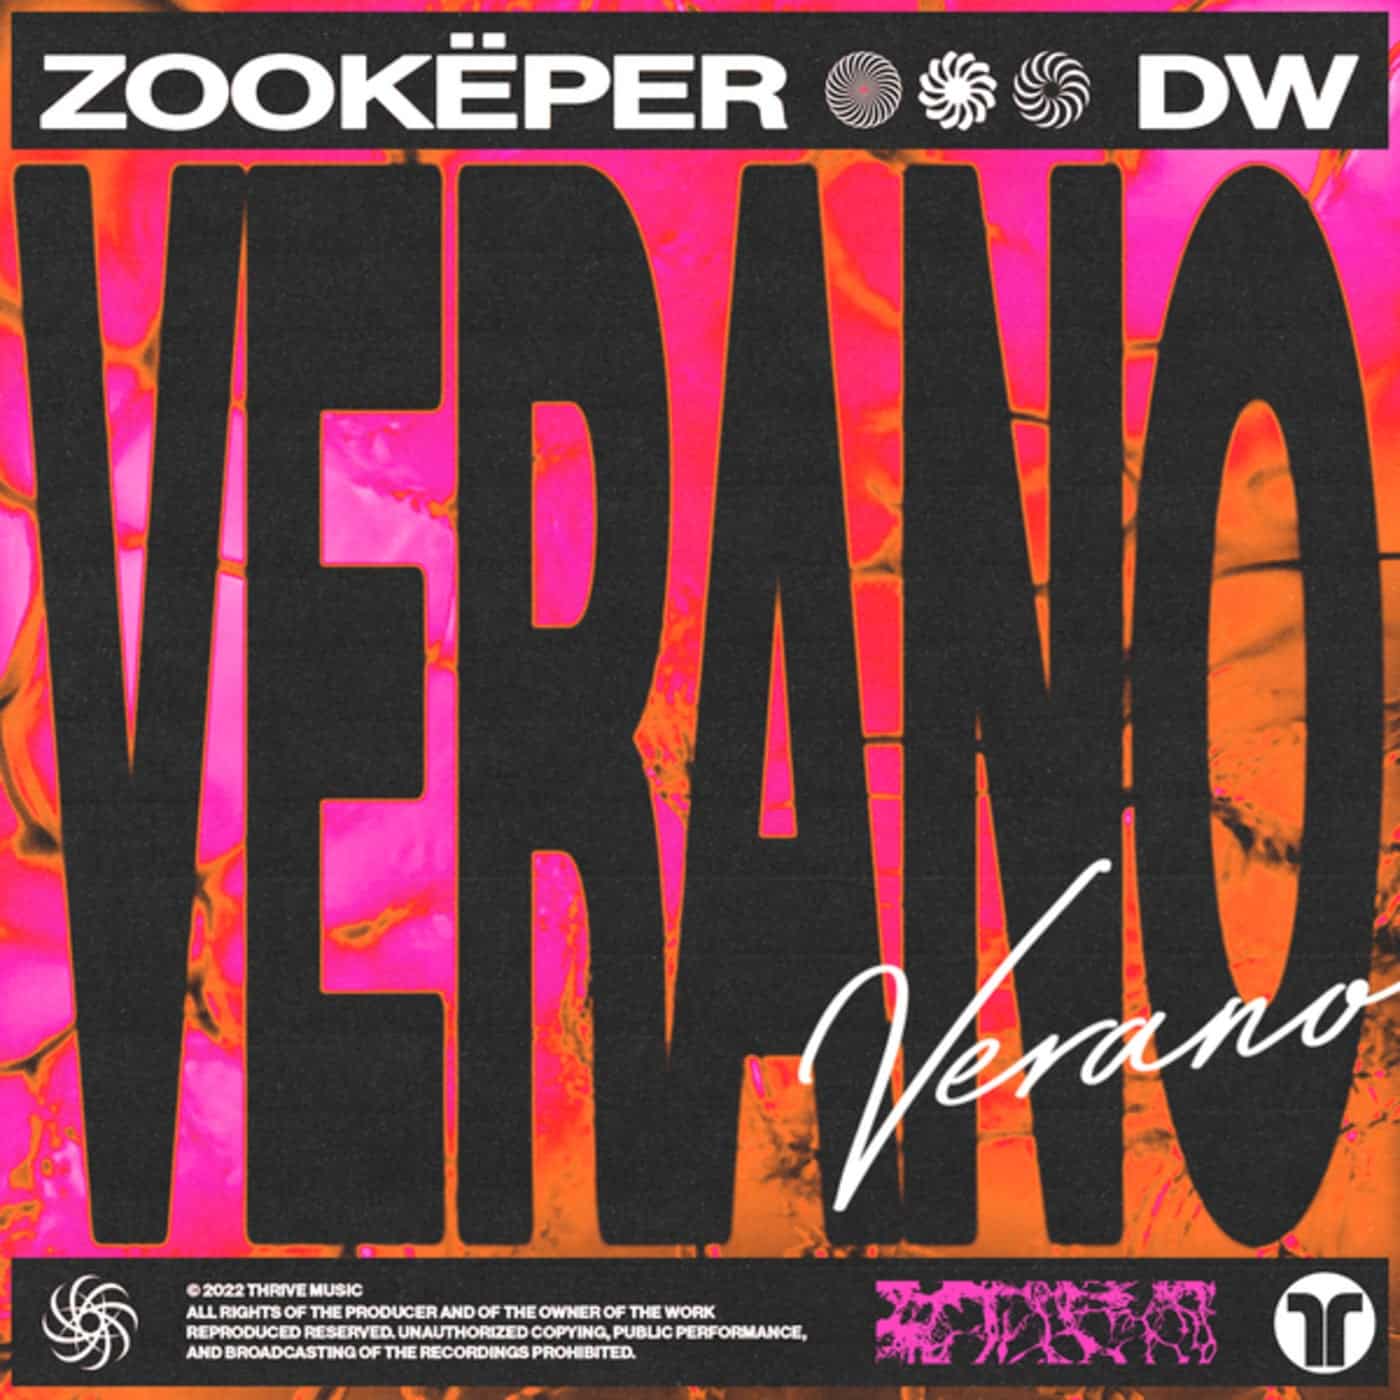 Download DW, Zookëper - Verano on Electrobuzz